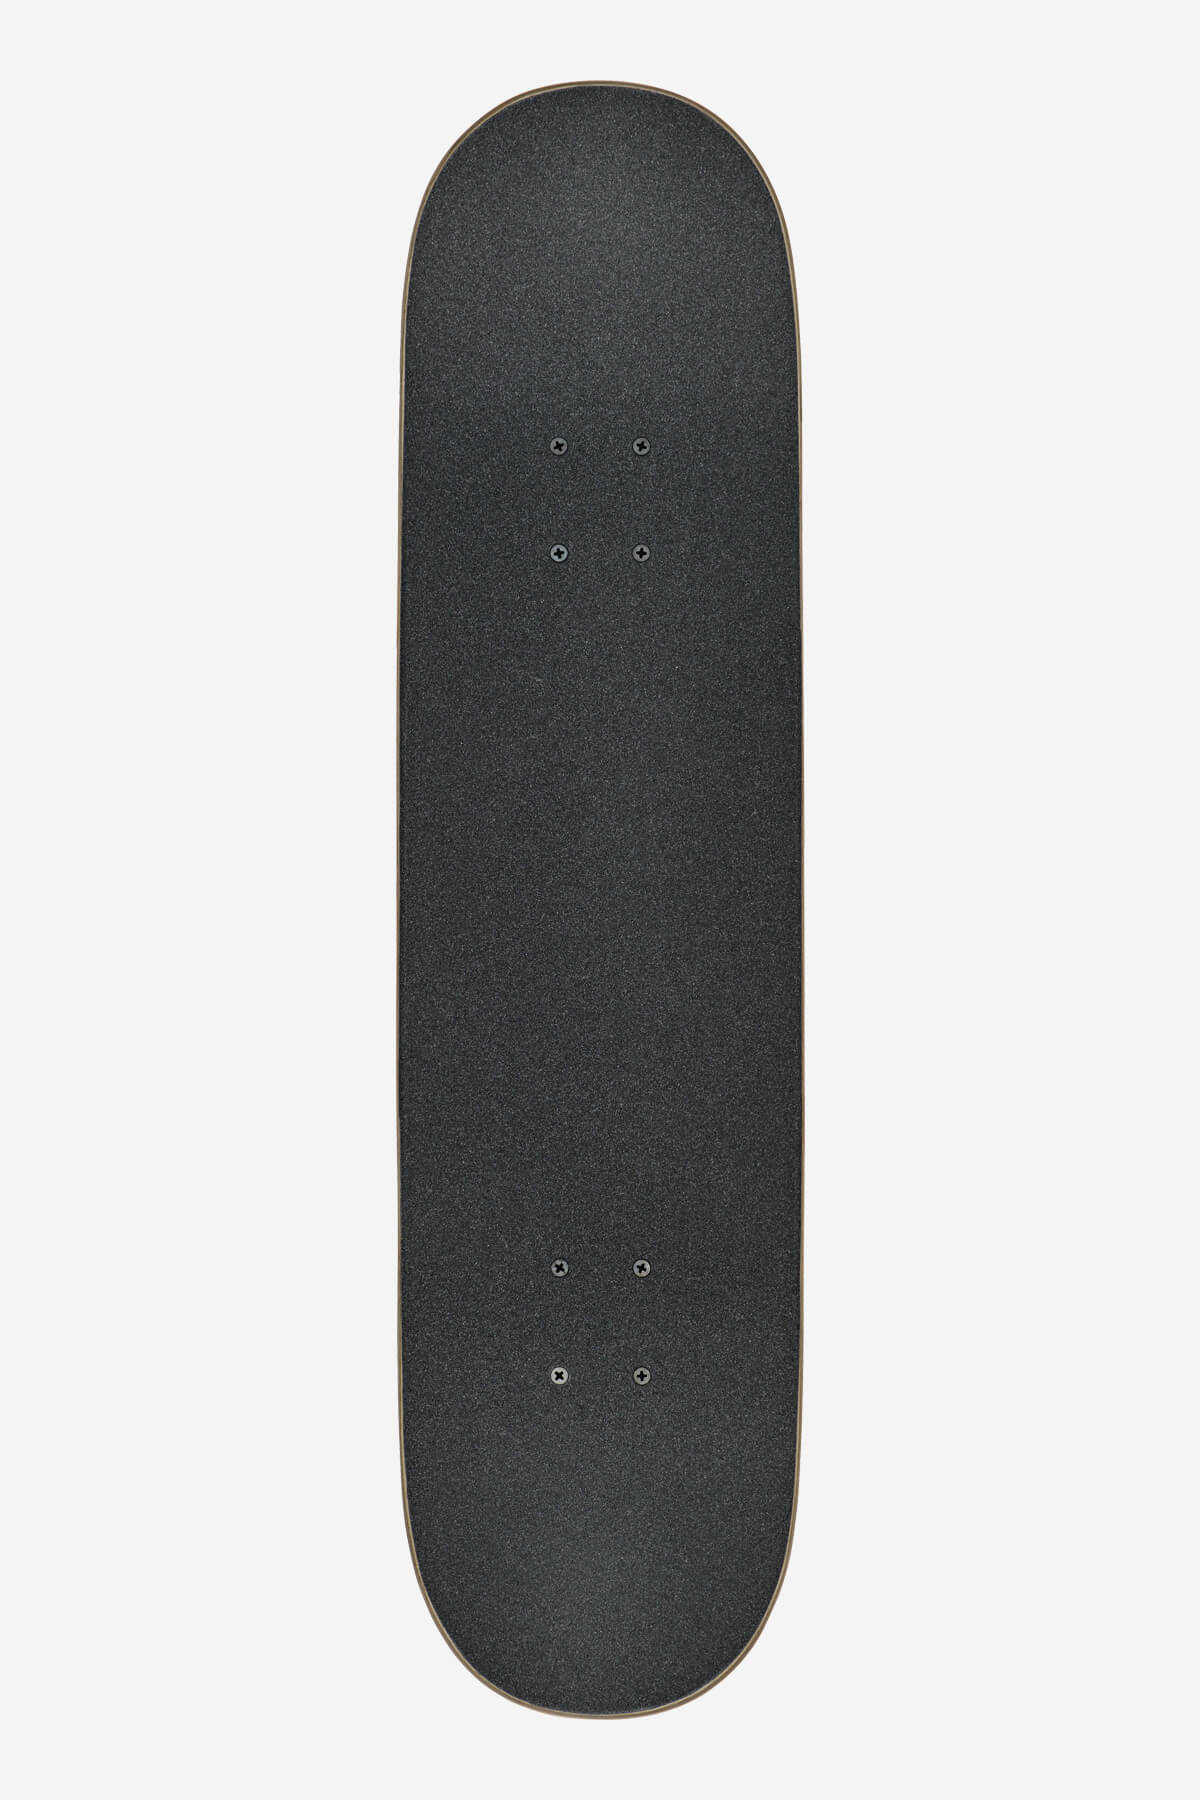 Globe - Goodstock - Champán - 8.0" Completo Skateboard